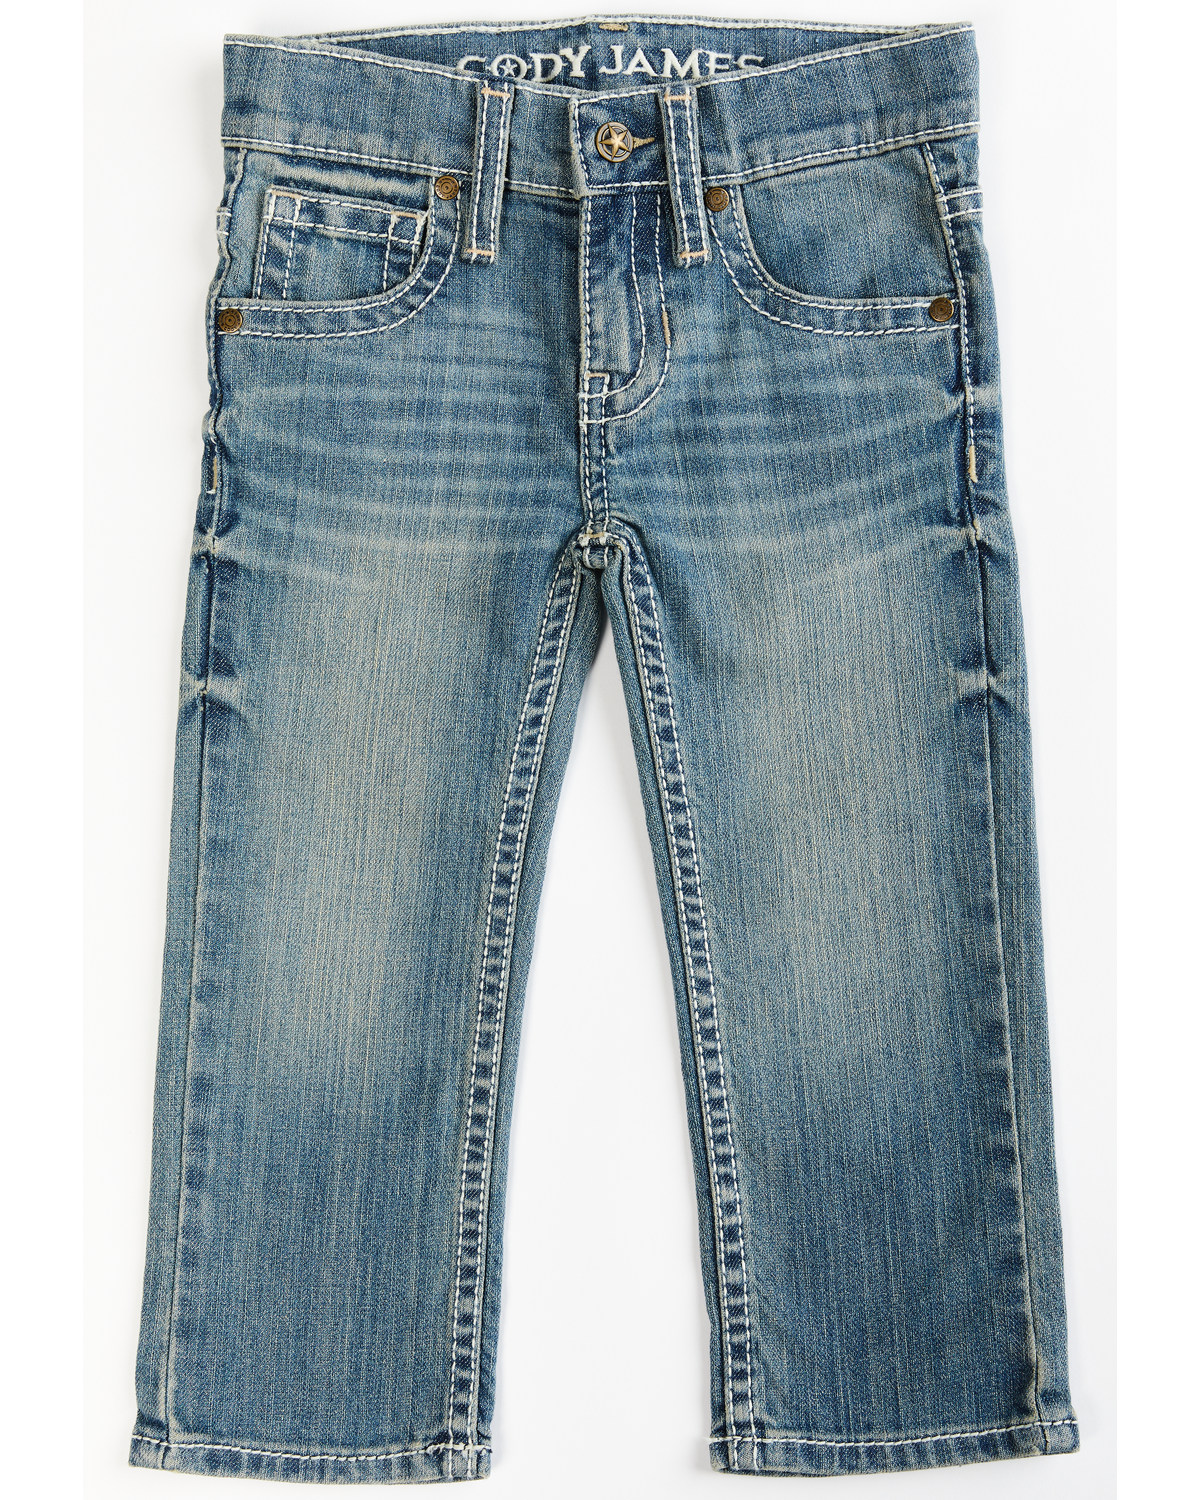 Cody James Toddler Boys' Clovehitch Light Wash Stretch Slim Straight Jeans